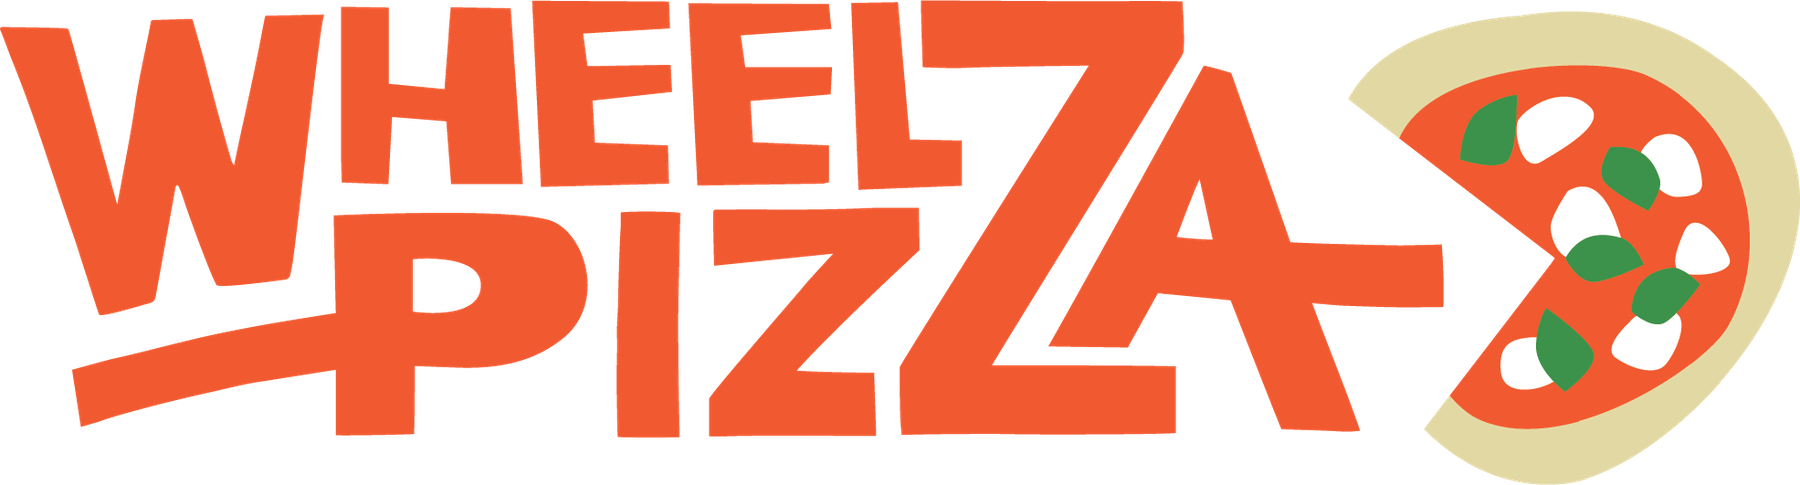 Wheelz Pizza Wrightsville Beach logo top